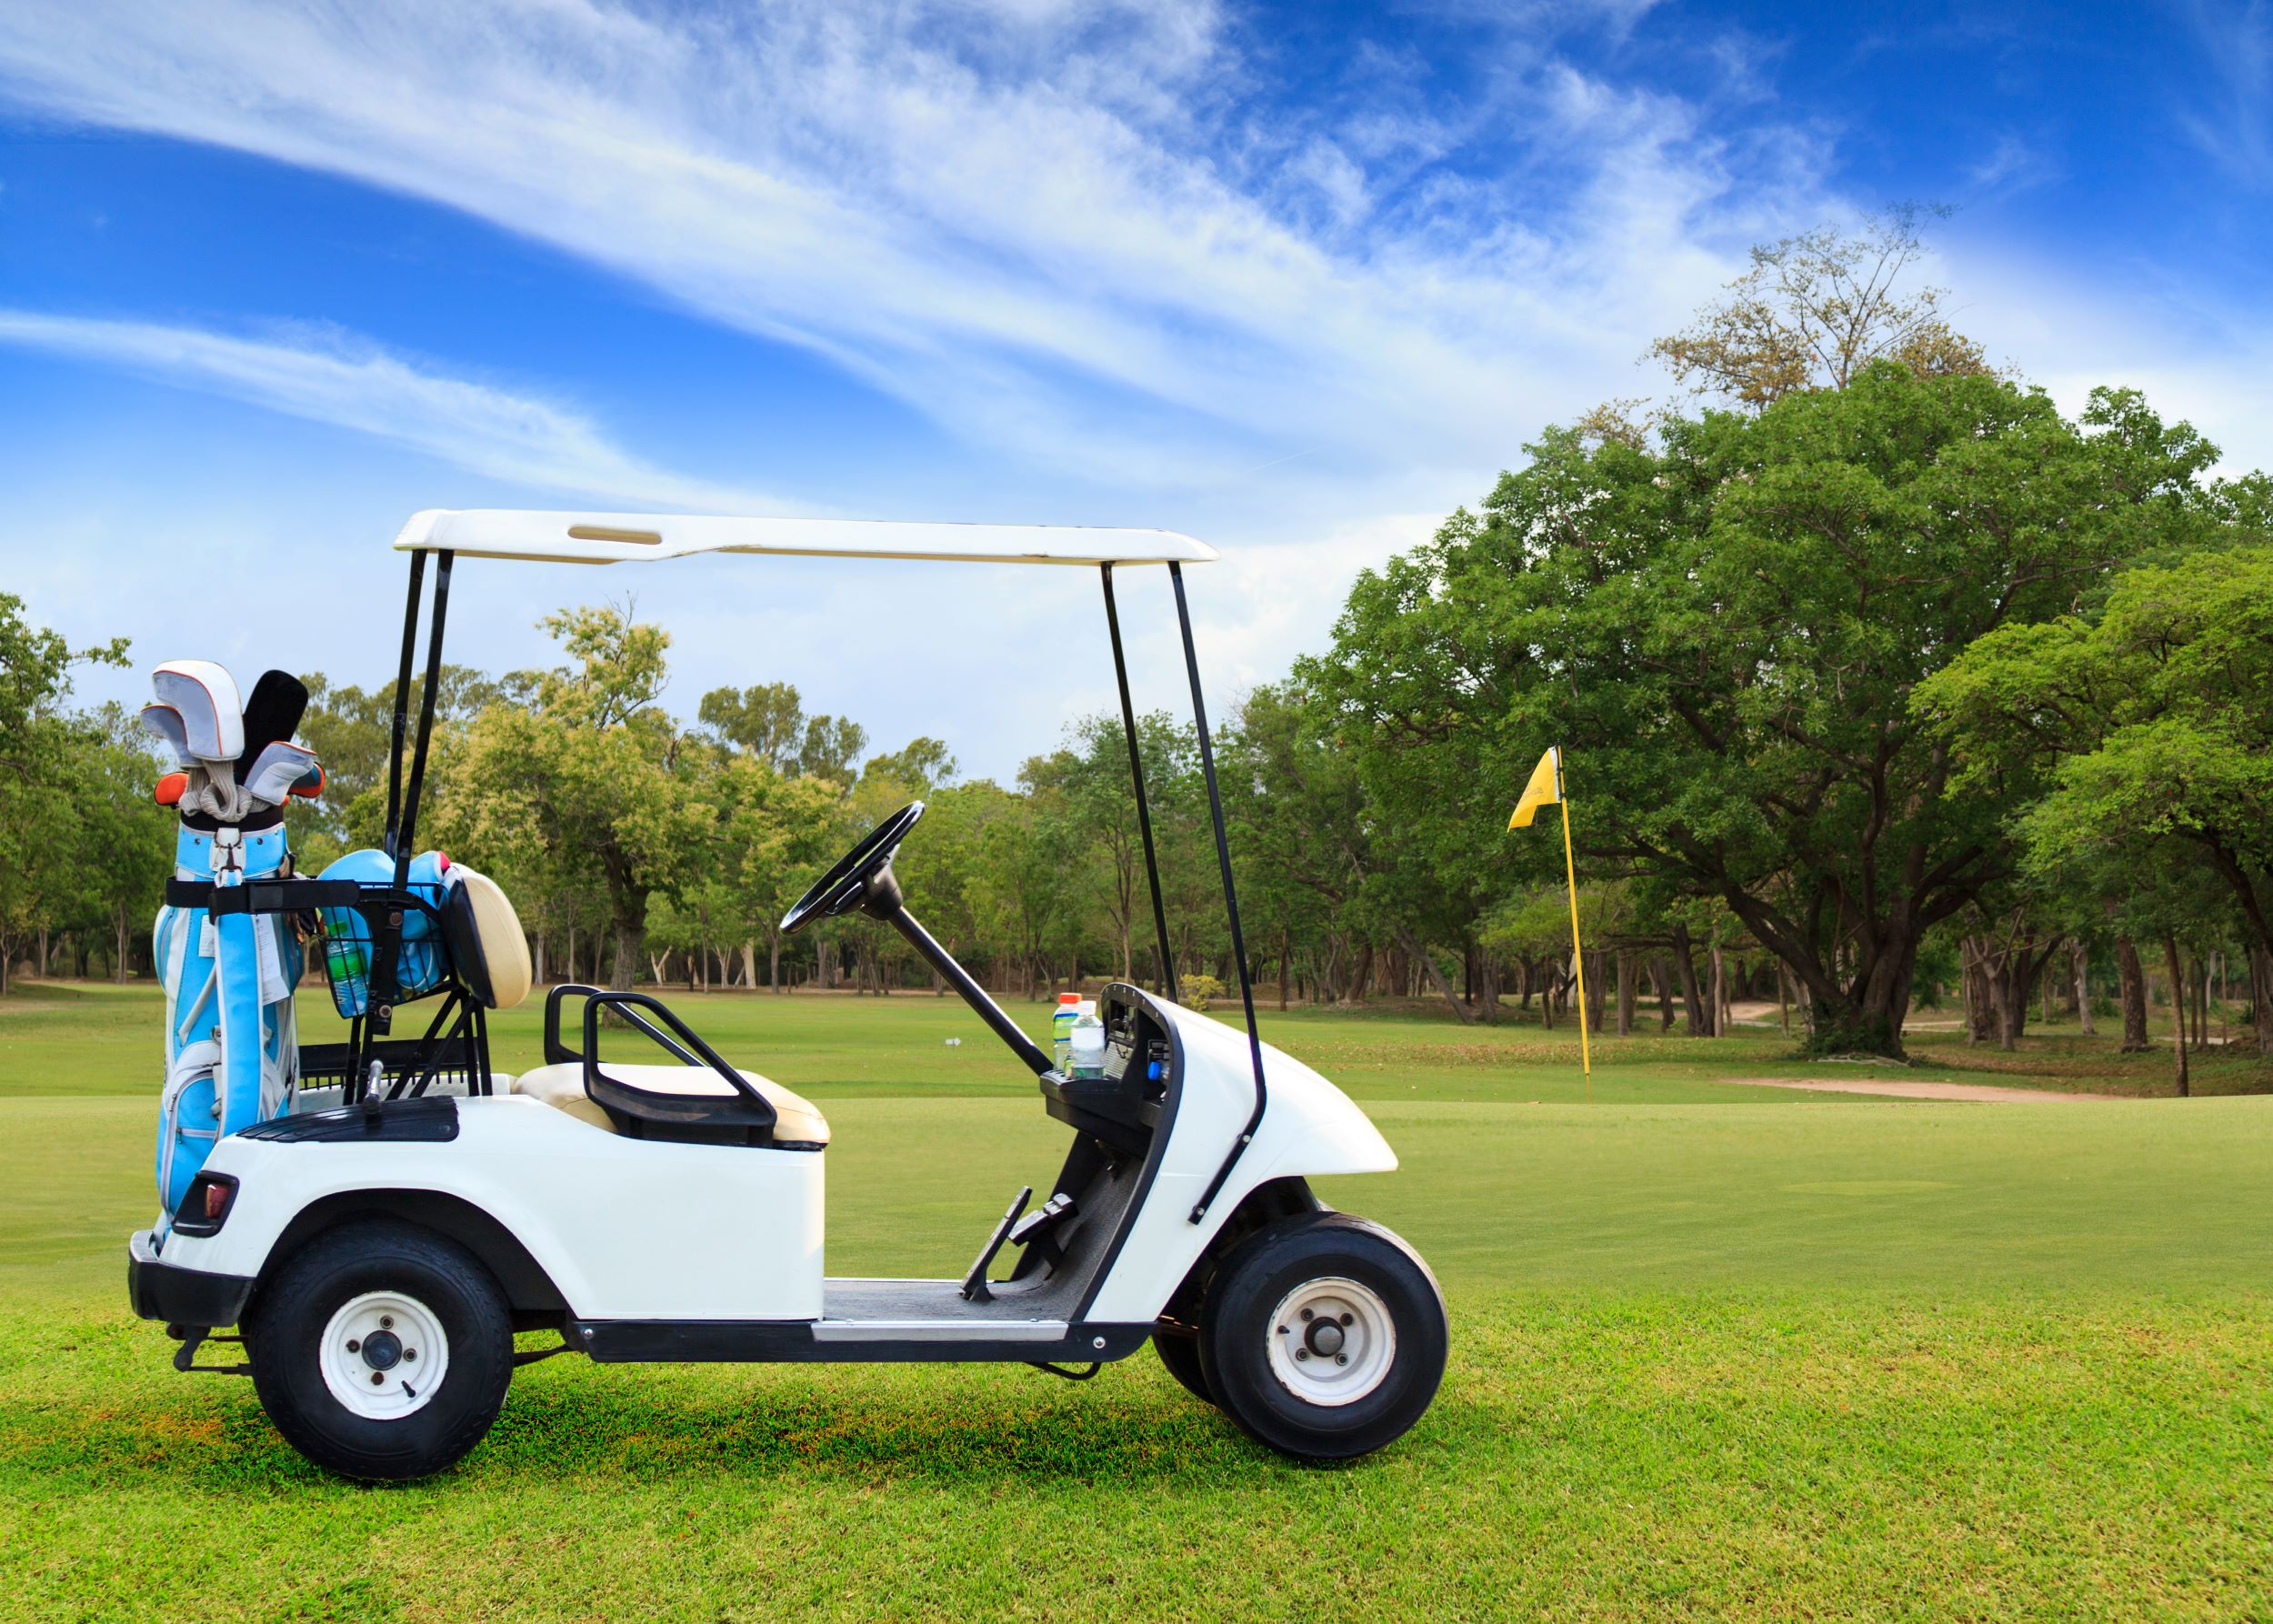 Golf Cart Safety Tips